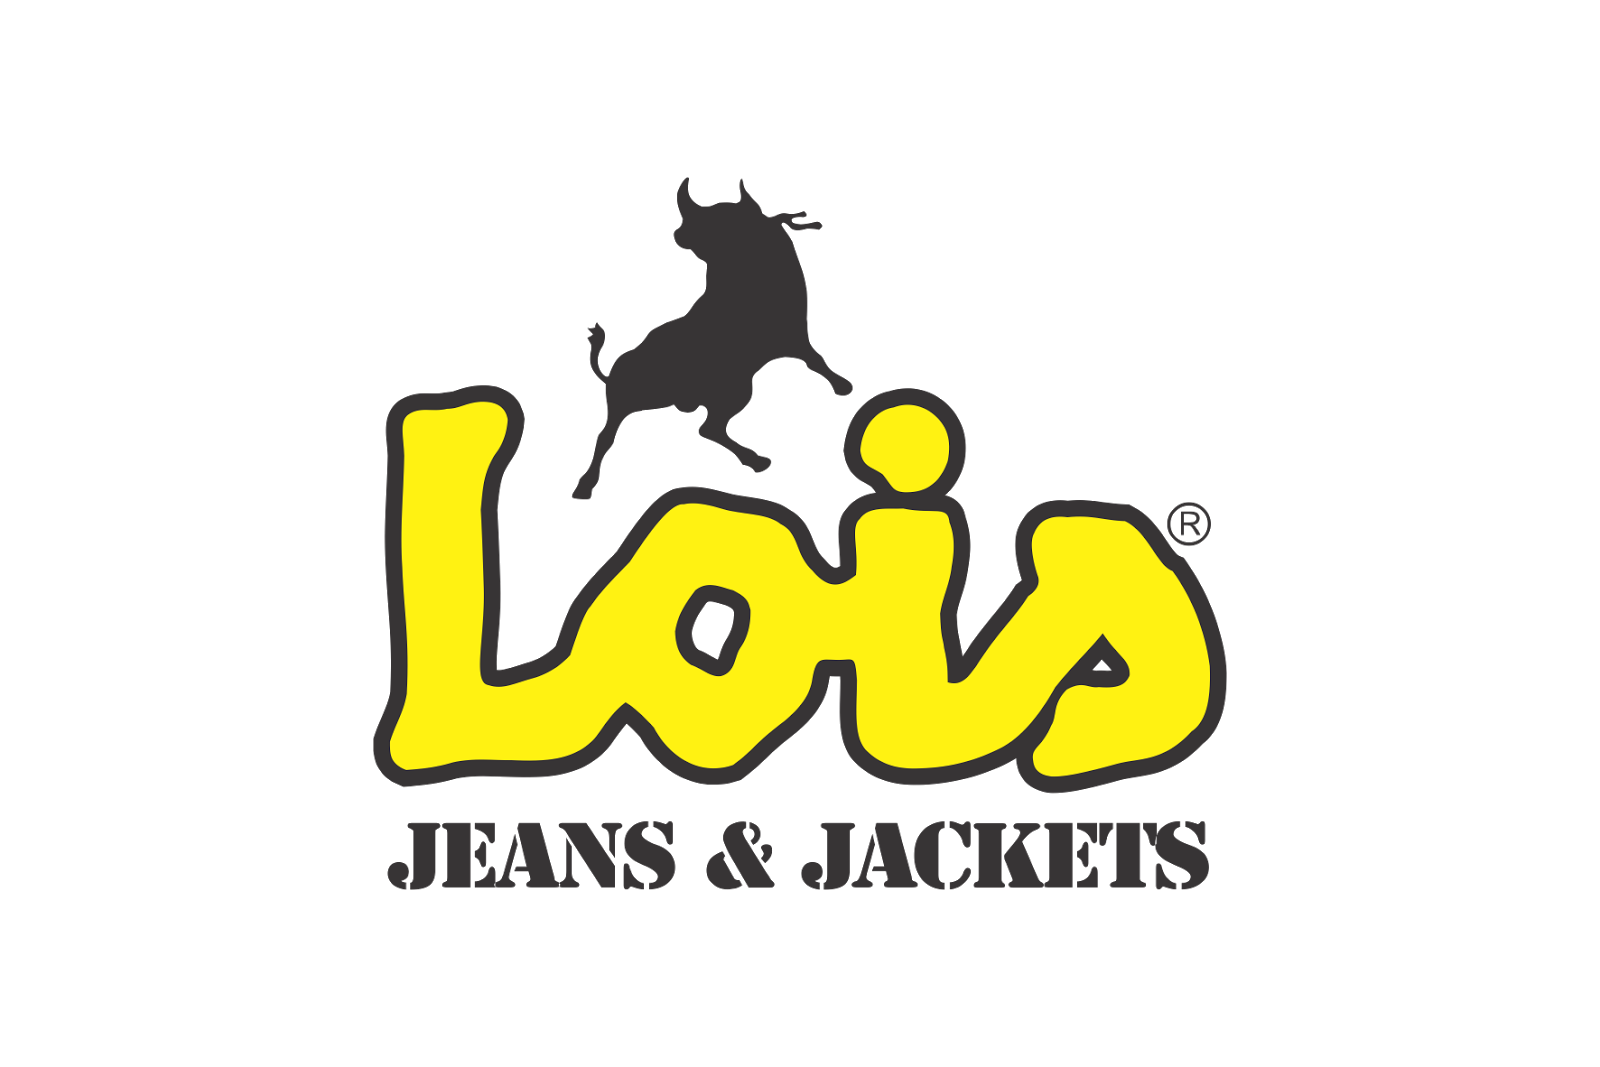 Lois Jeans Logo - logo cdr vector